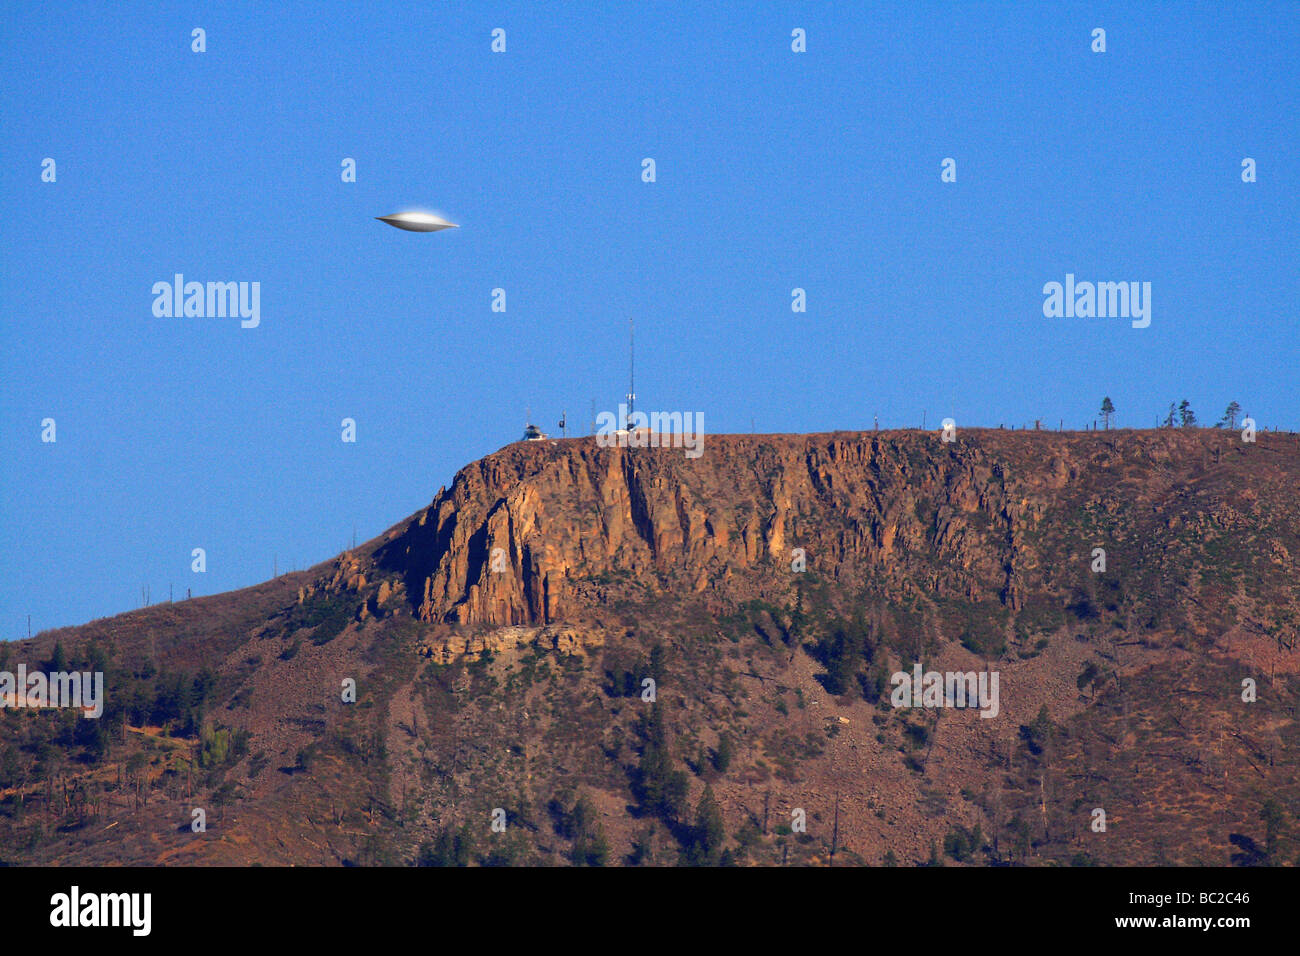 UFO sighting, Dulce, New Mexico, USA Stock Photo